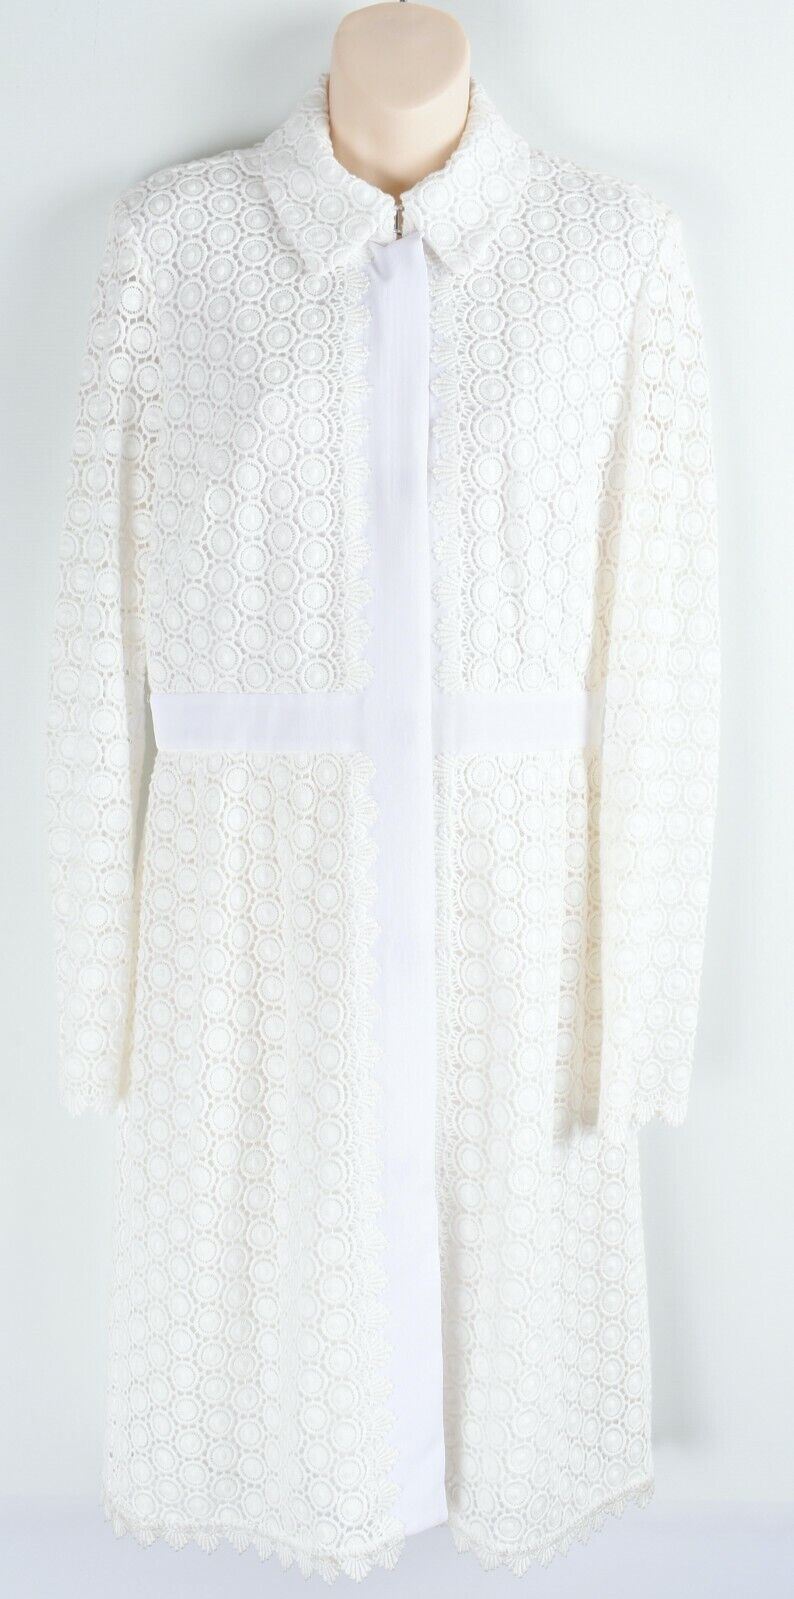 DIANE VON FURSTENBERG Women's Long Sleeve Crochet Dress, Cream, size UK 12